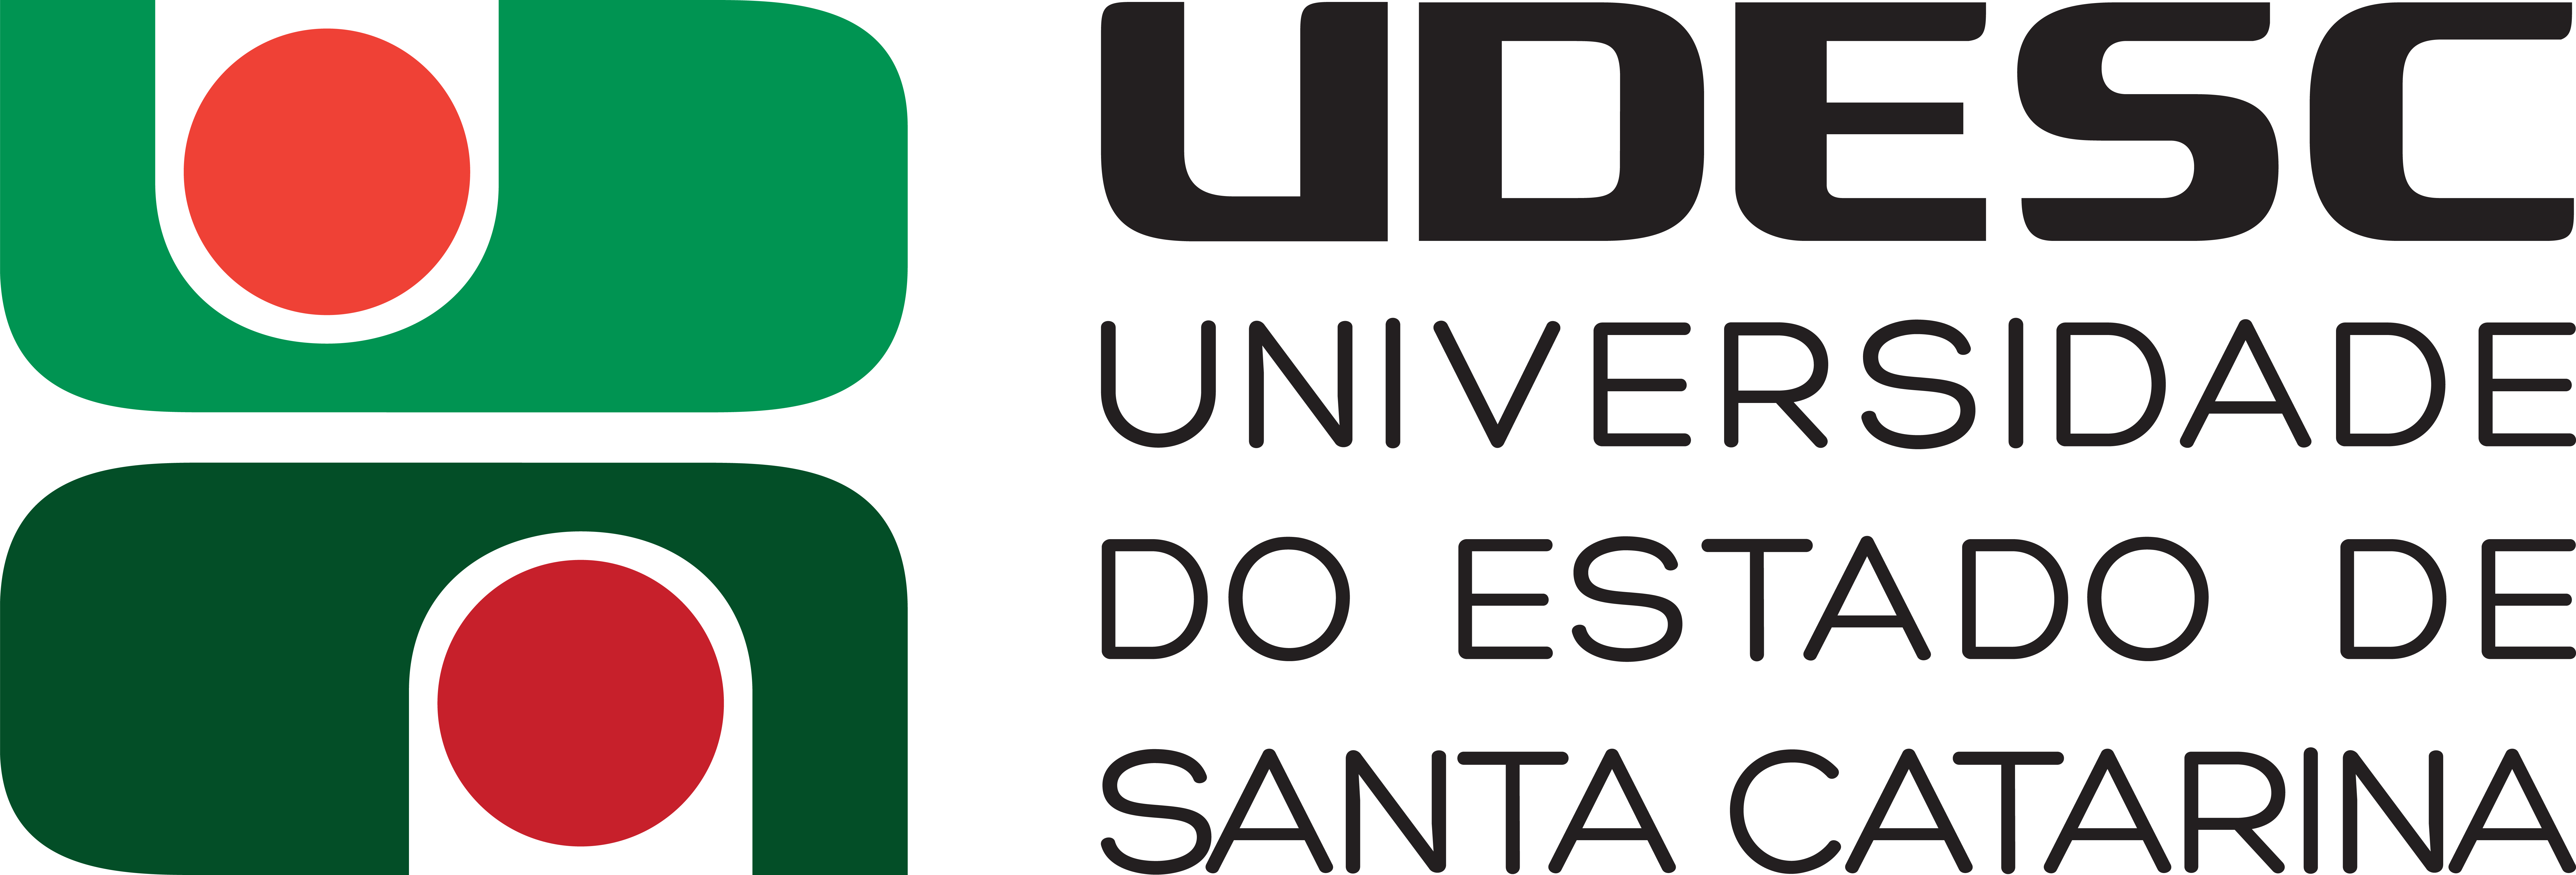 Santa Catarina State University